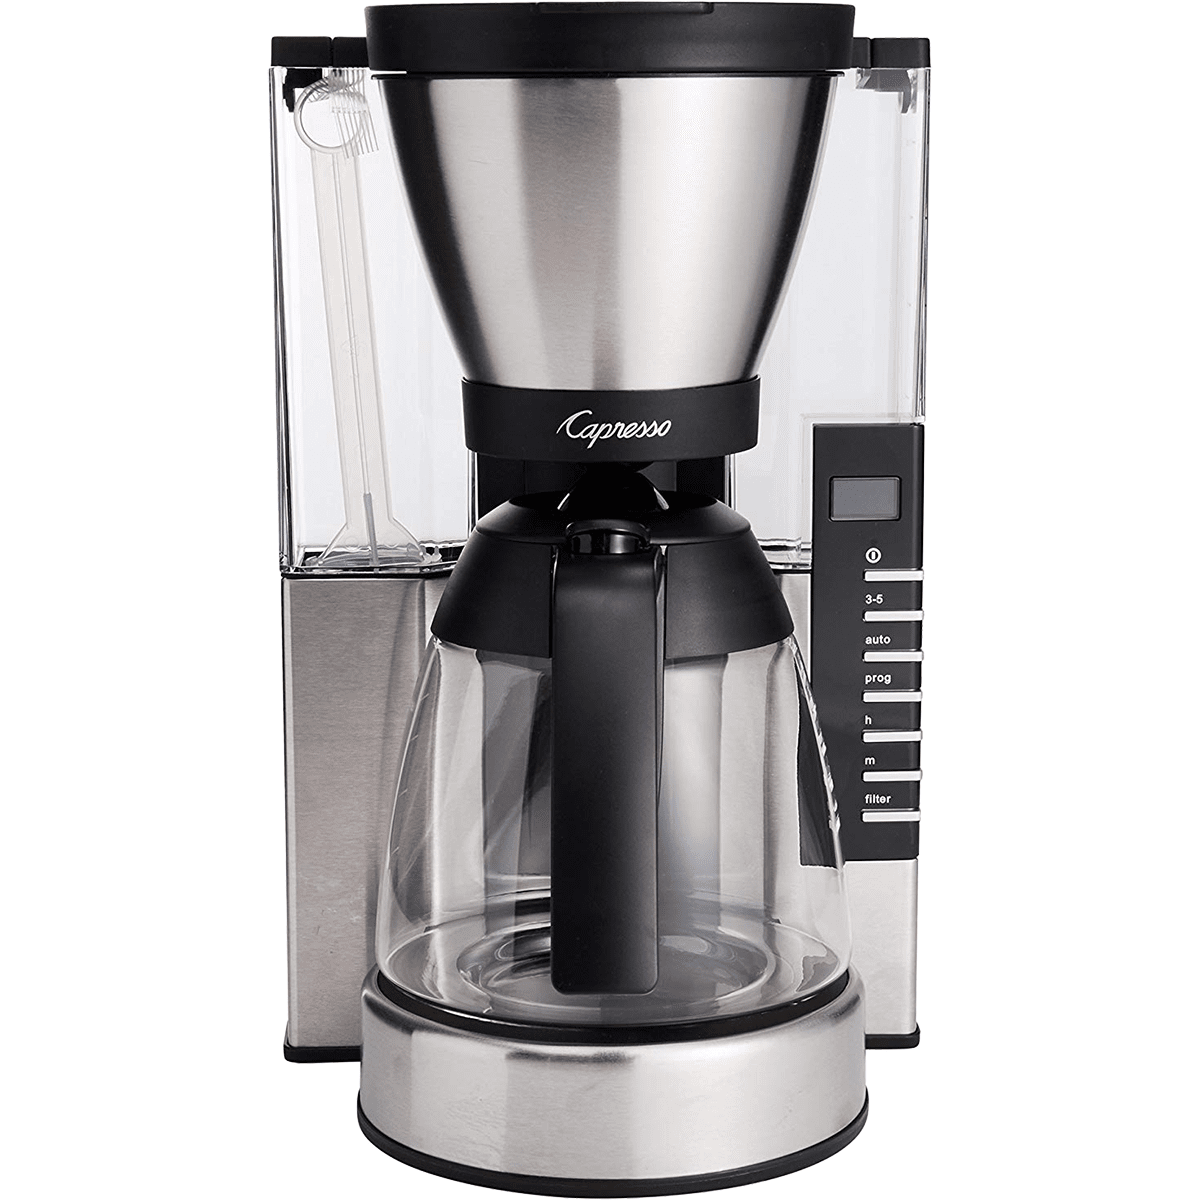 Capresso Mg900 10 Cup Rapid Brew Coffee Maker - Glass Carafe